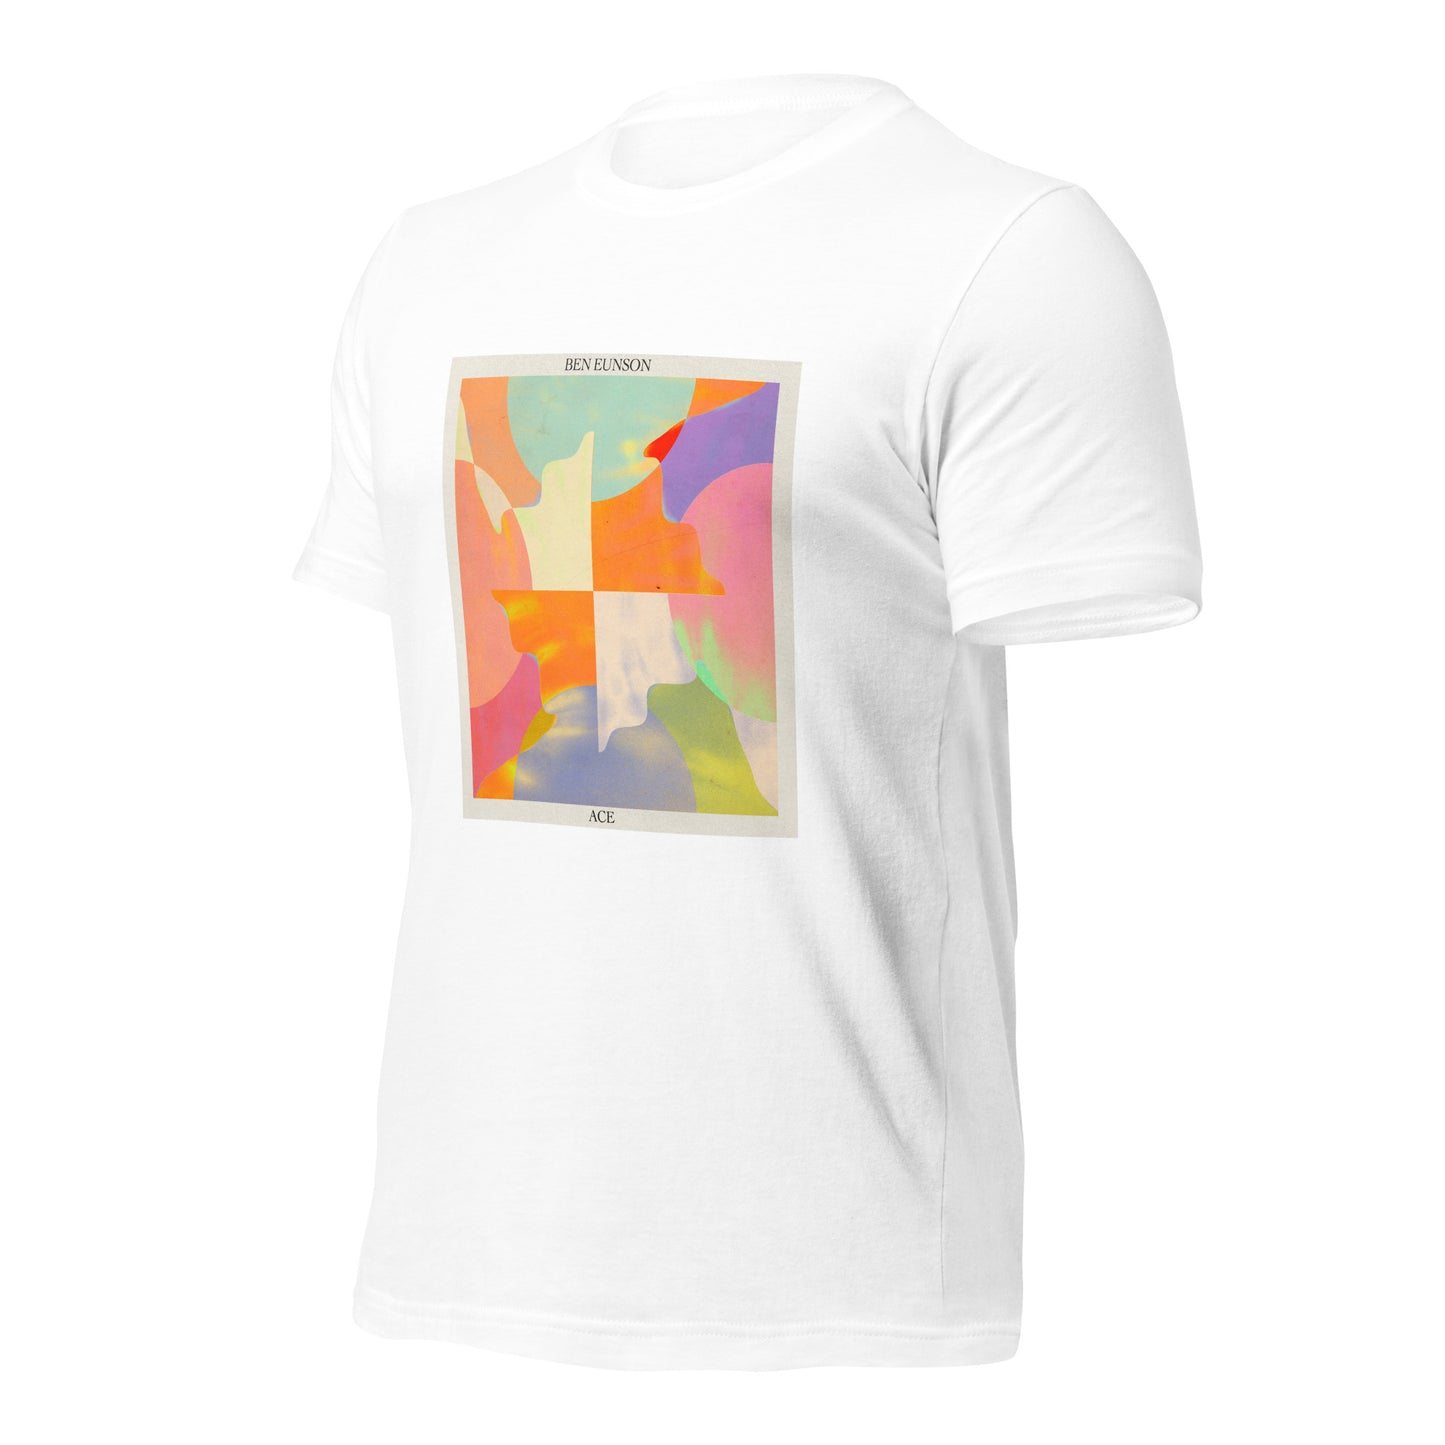 ACE Album Art T-Shirt